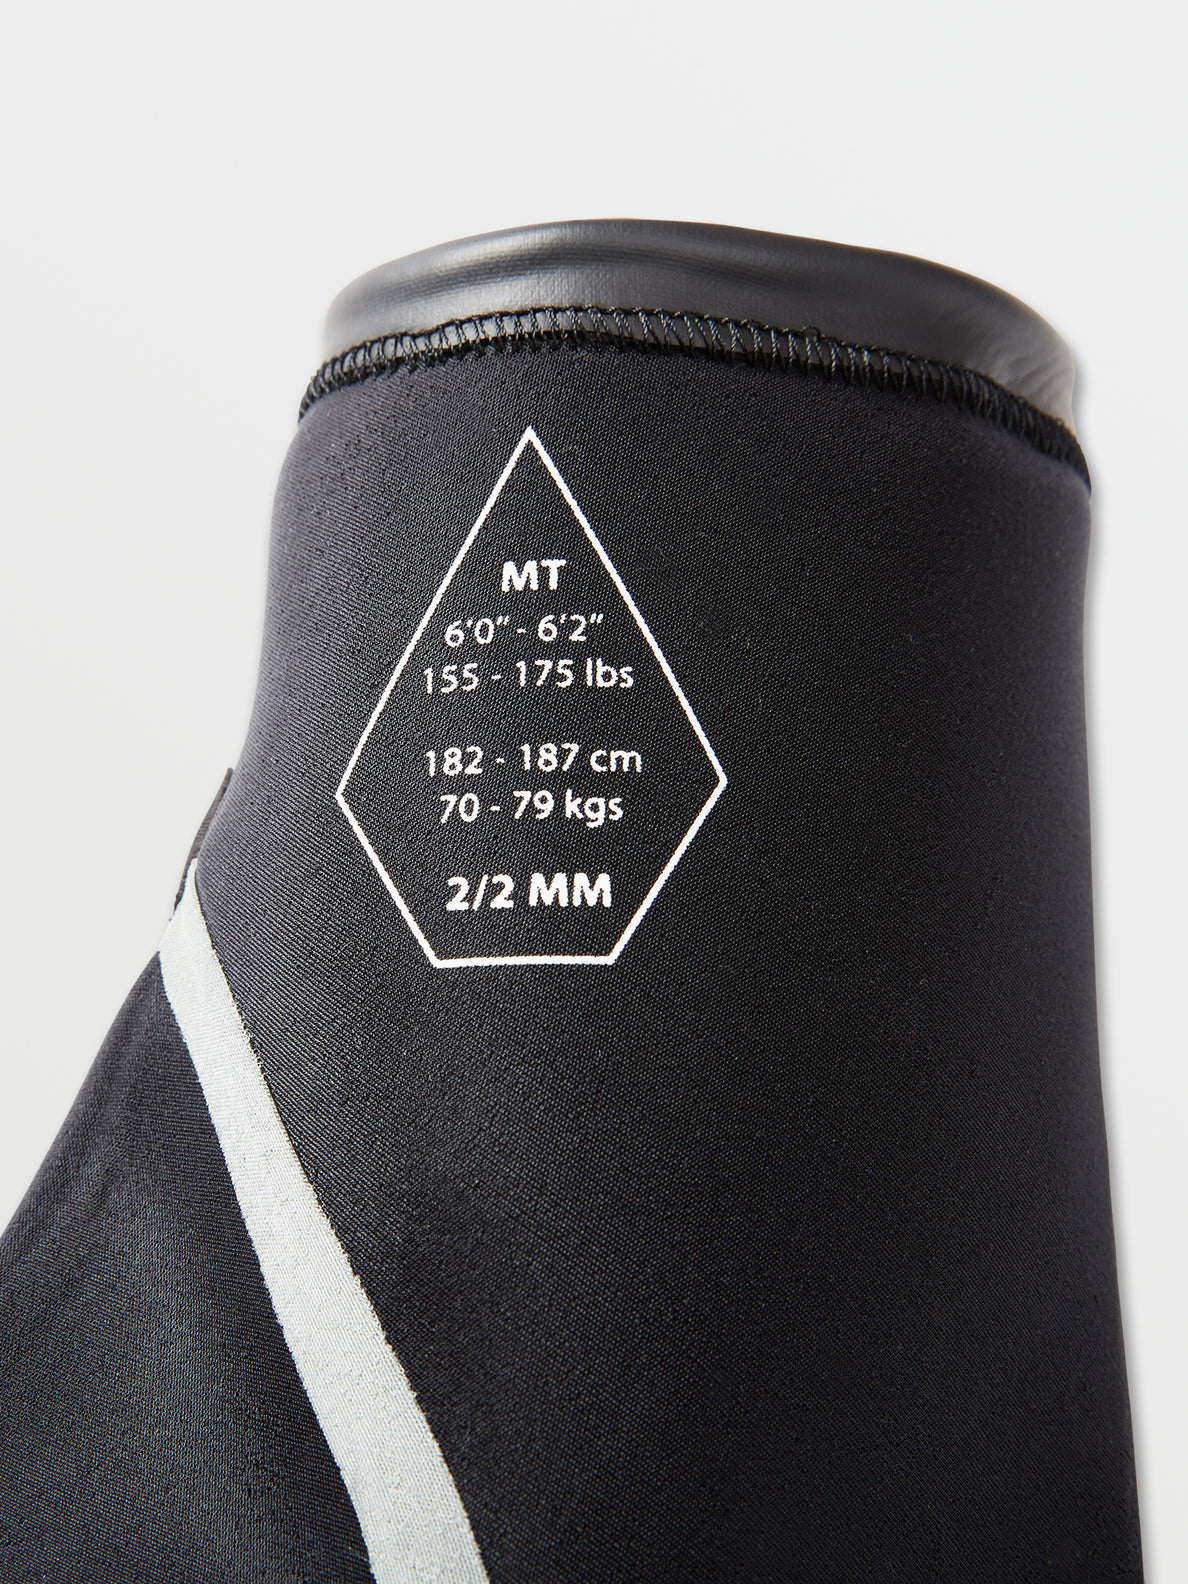 Modulator 2mm Short Sleeve Chest Zip Wetsuit - Black (2022)